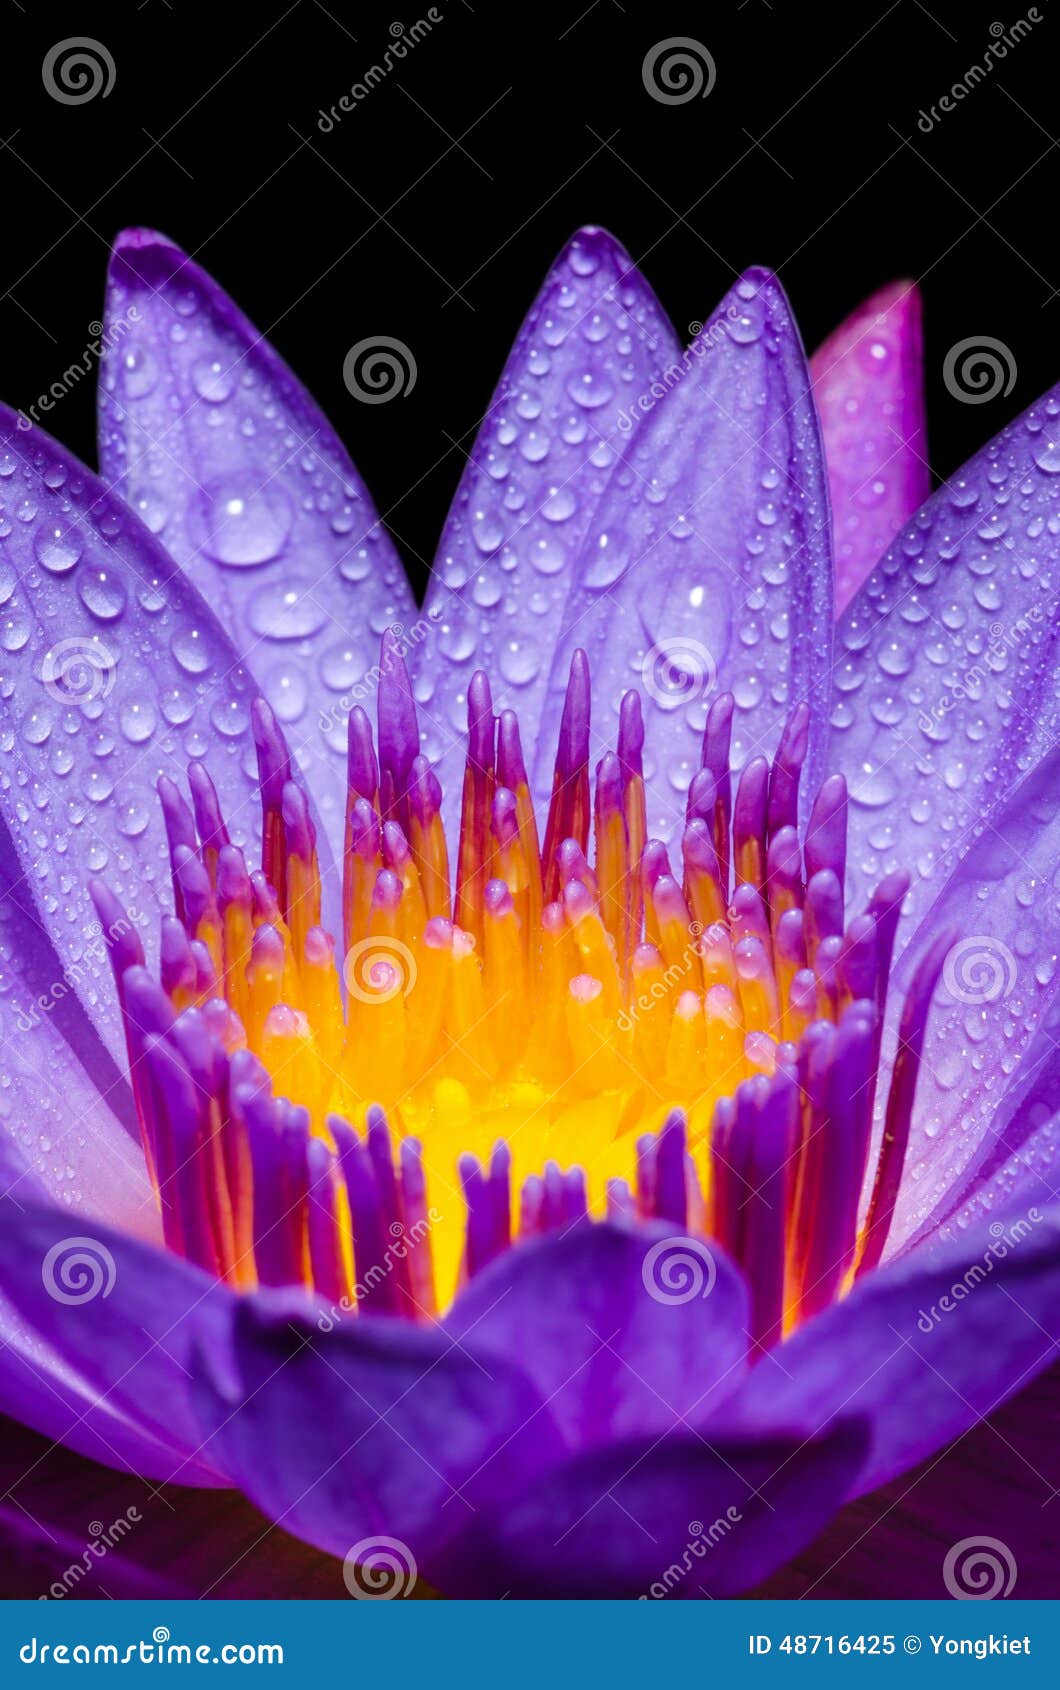 macro yellow carpel of purple lotus flower